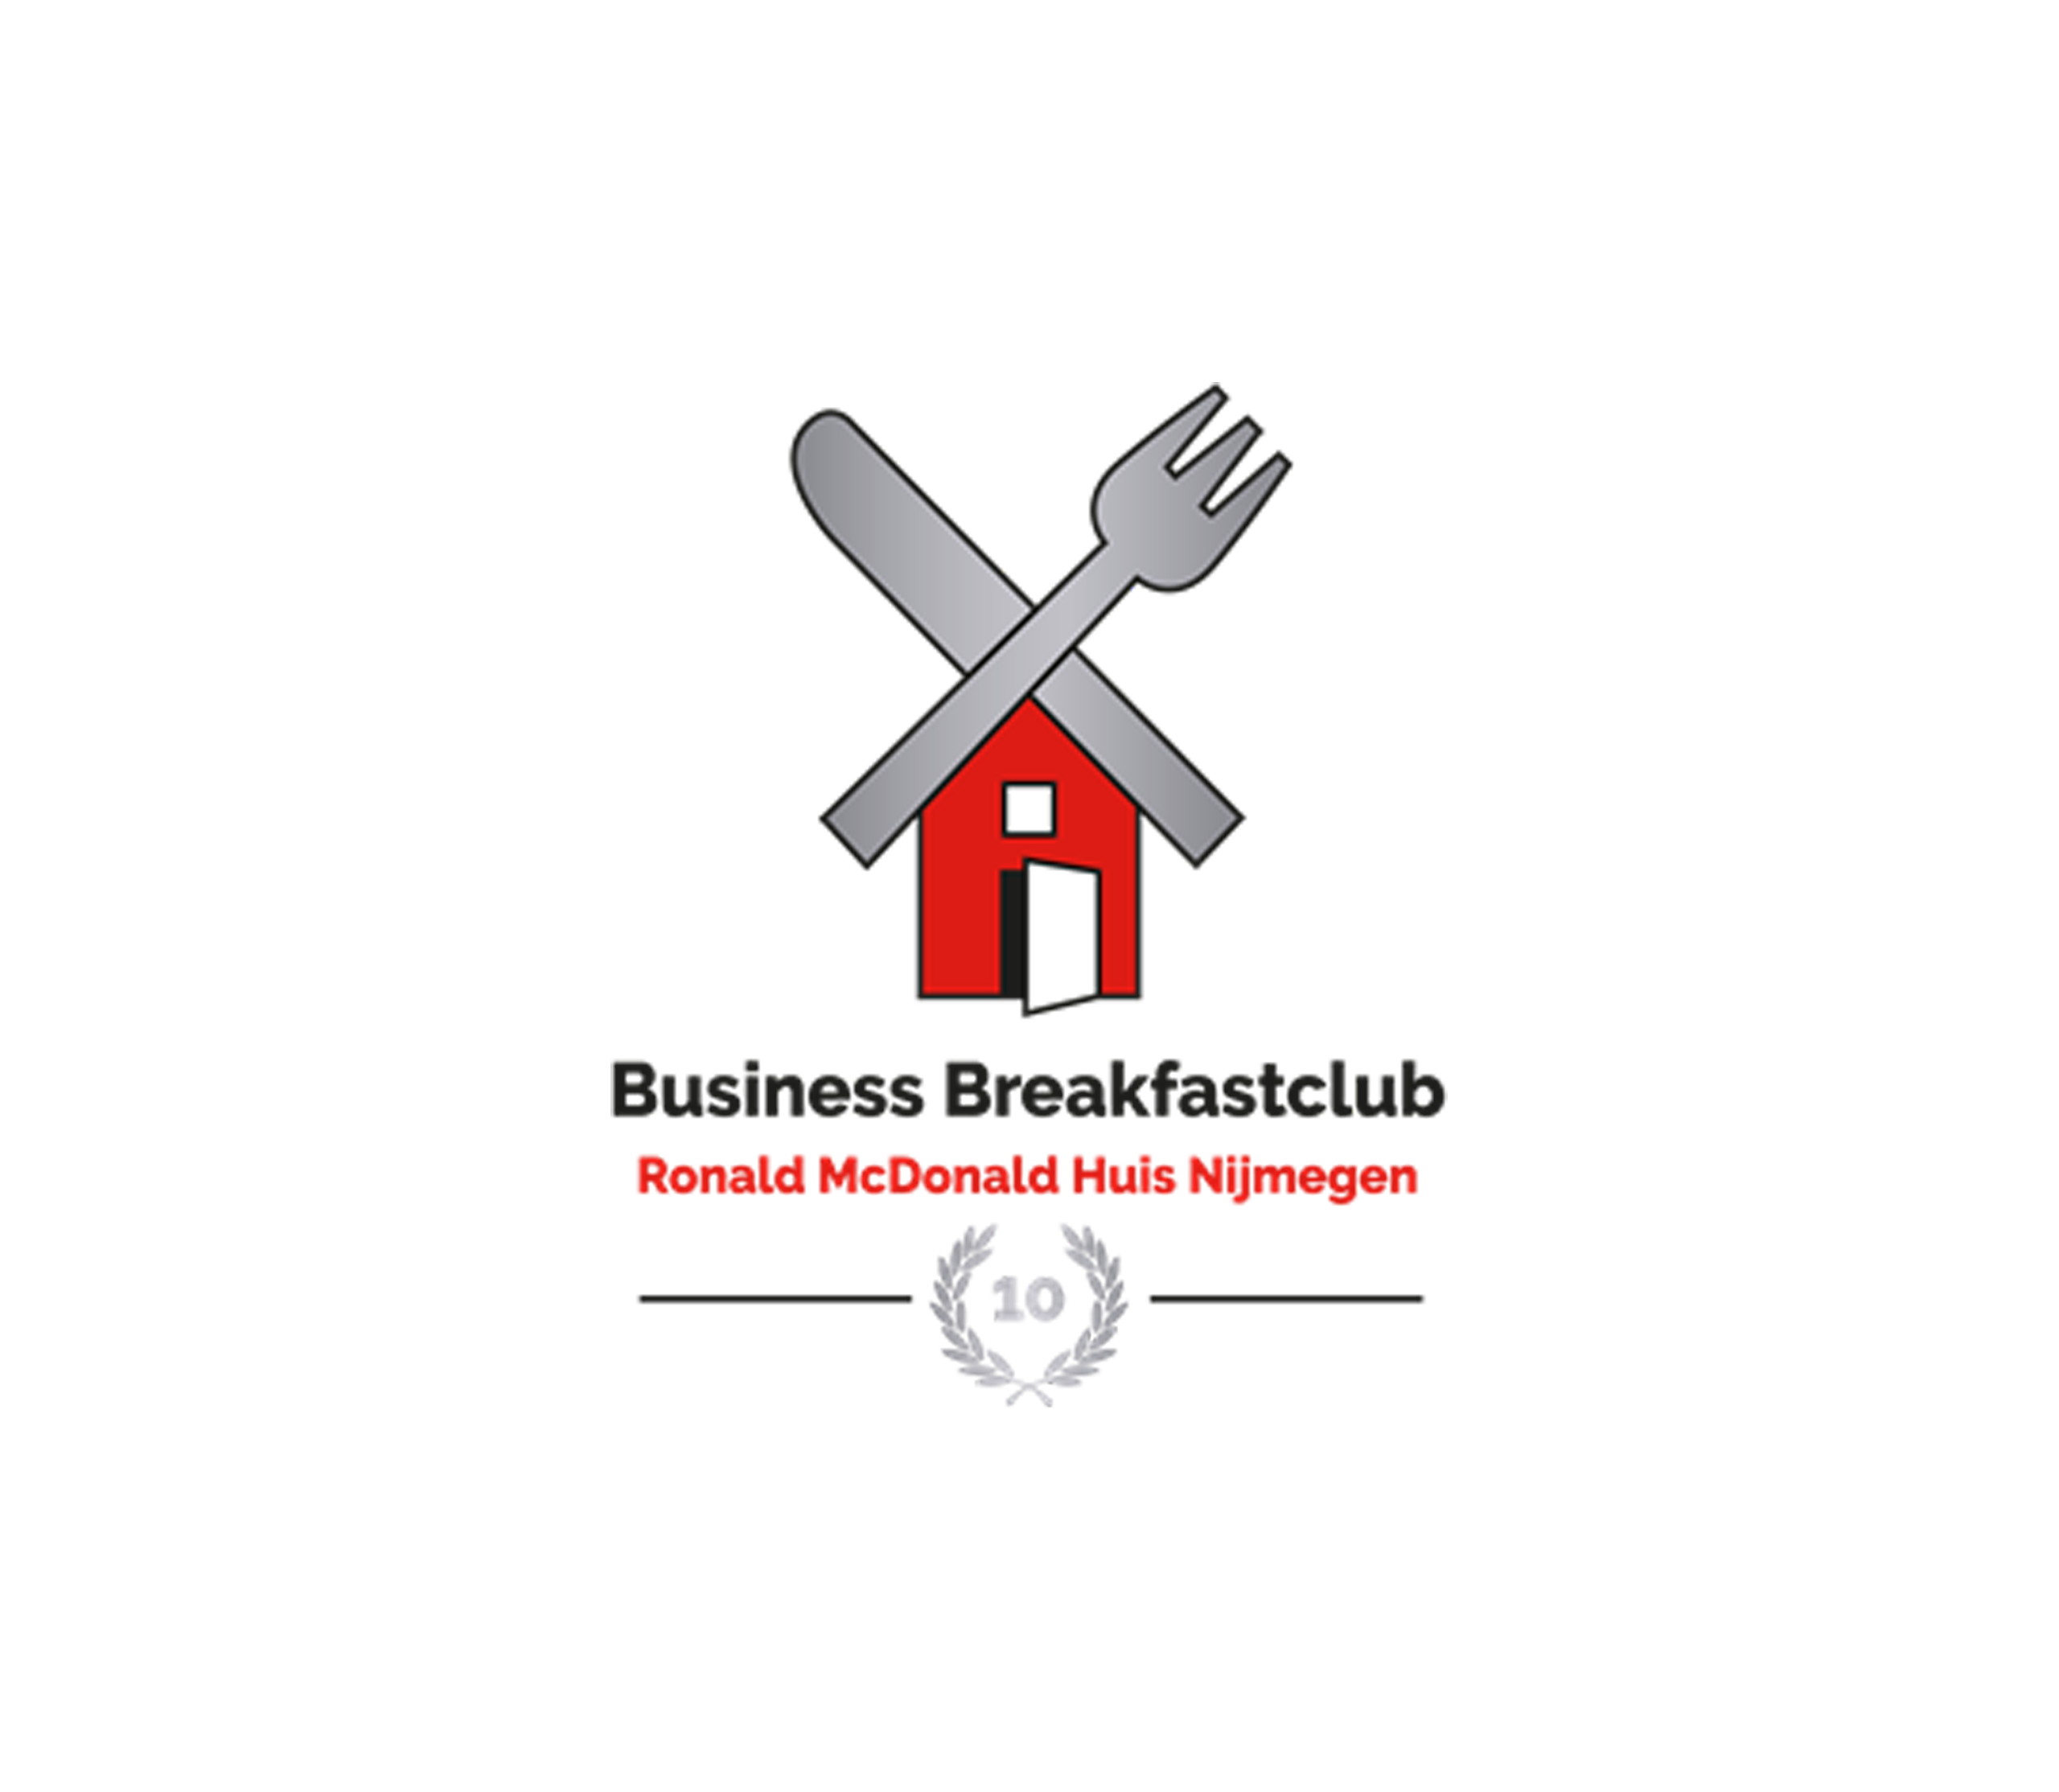 Business Breakfastclub